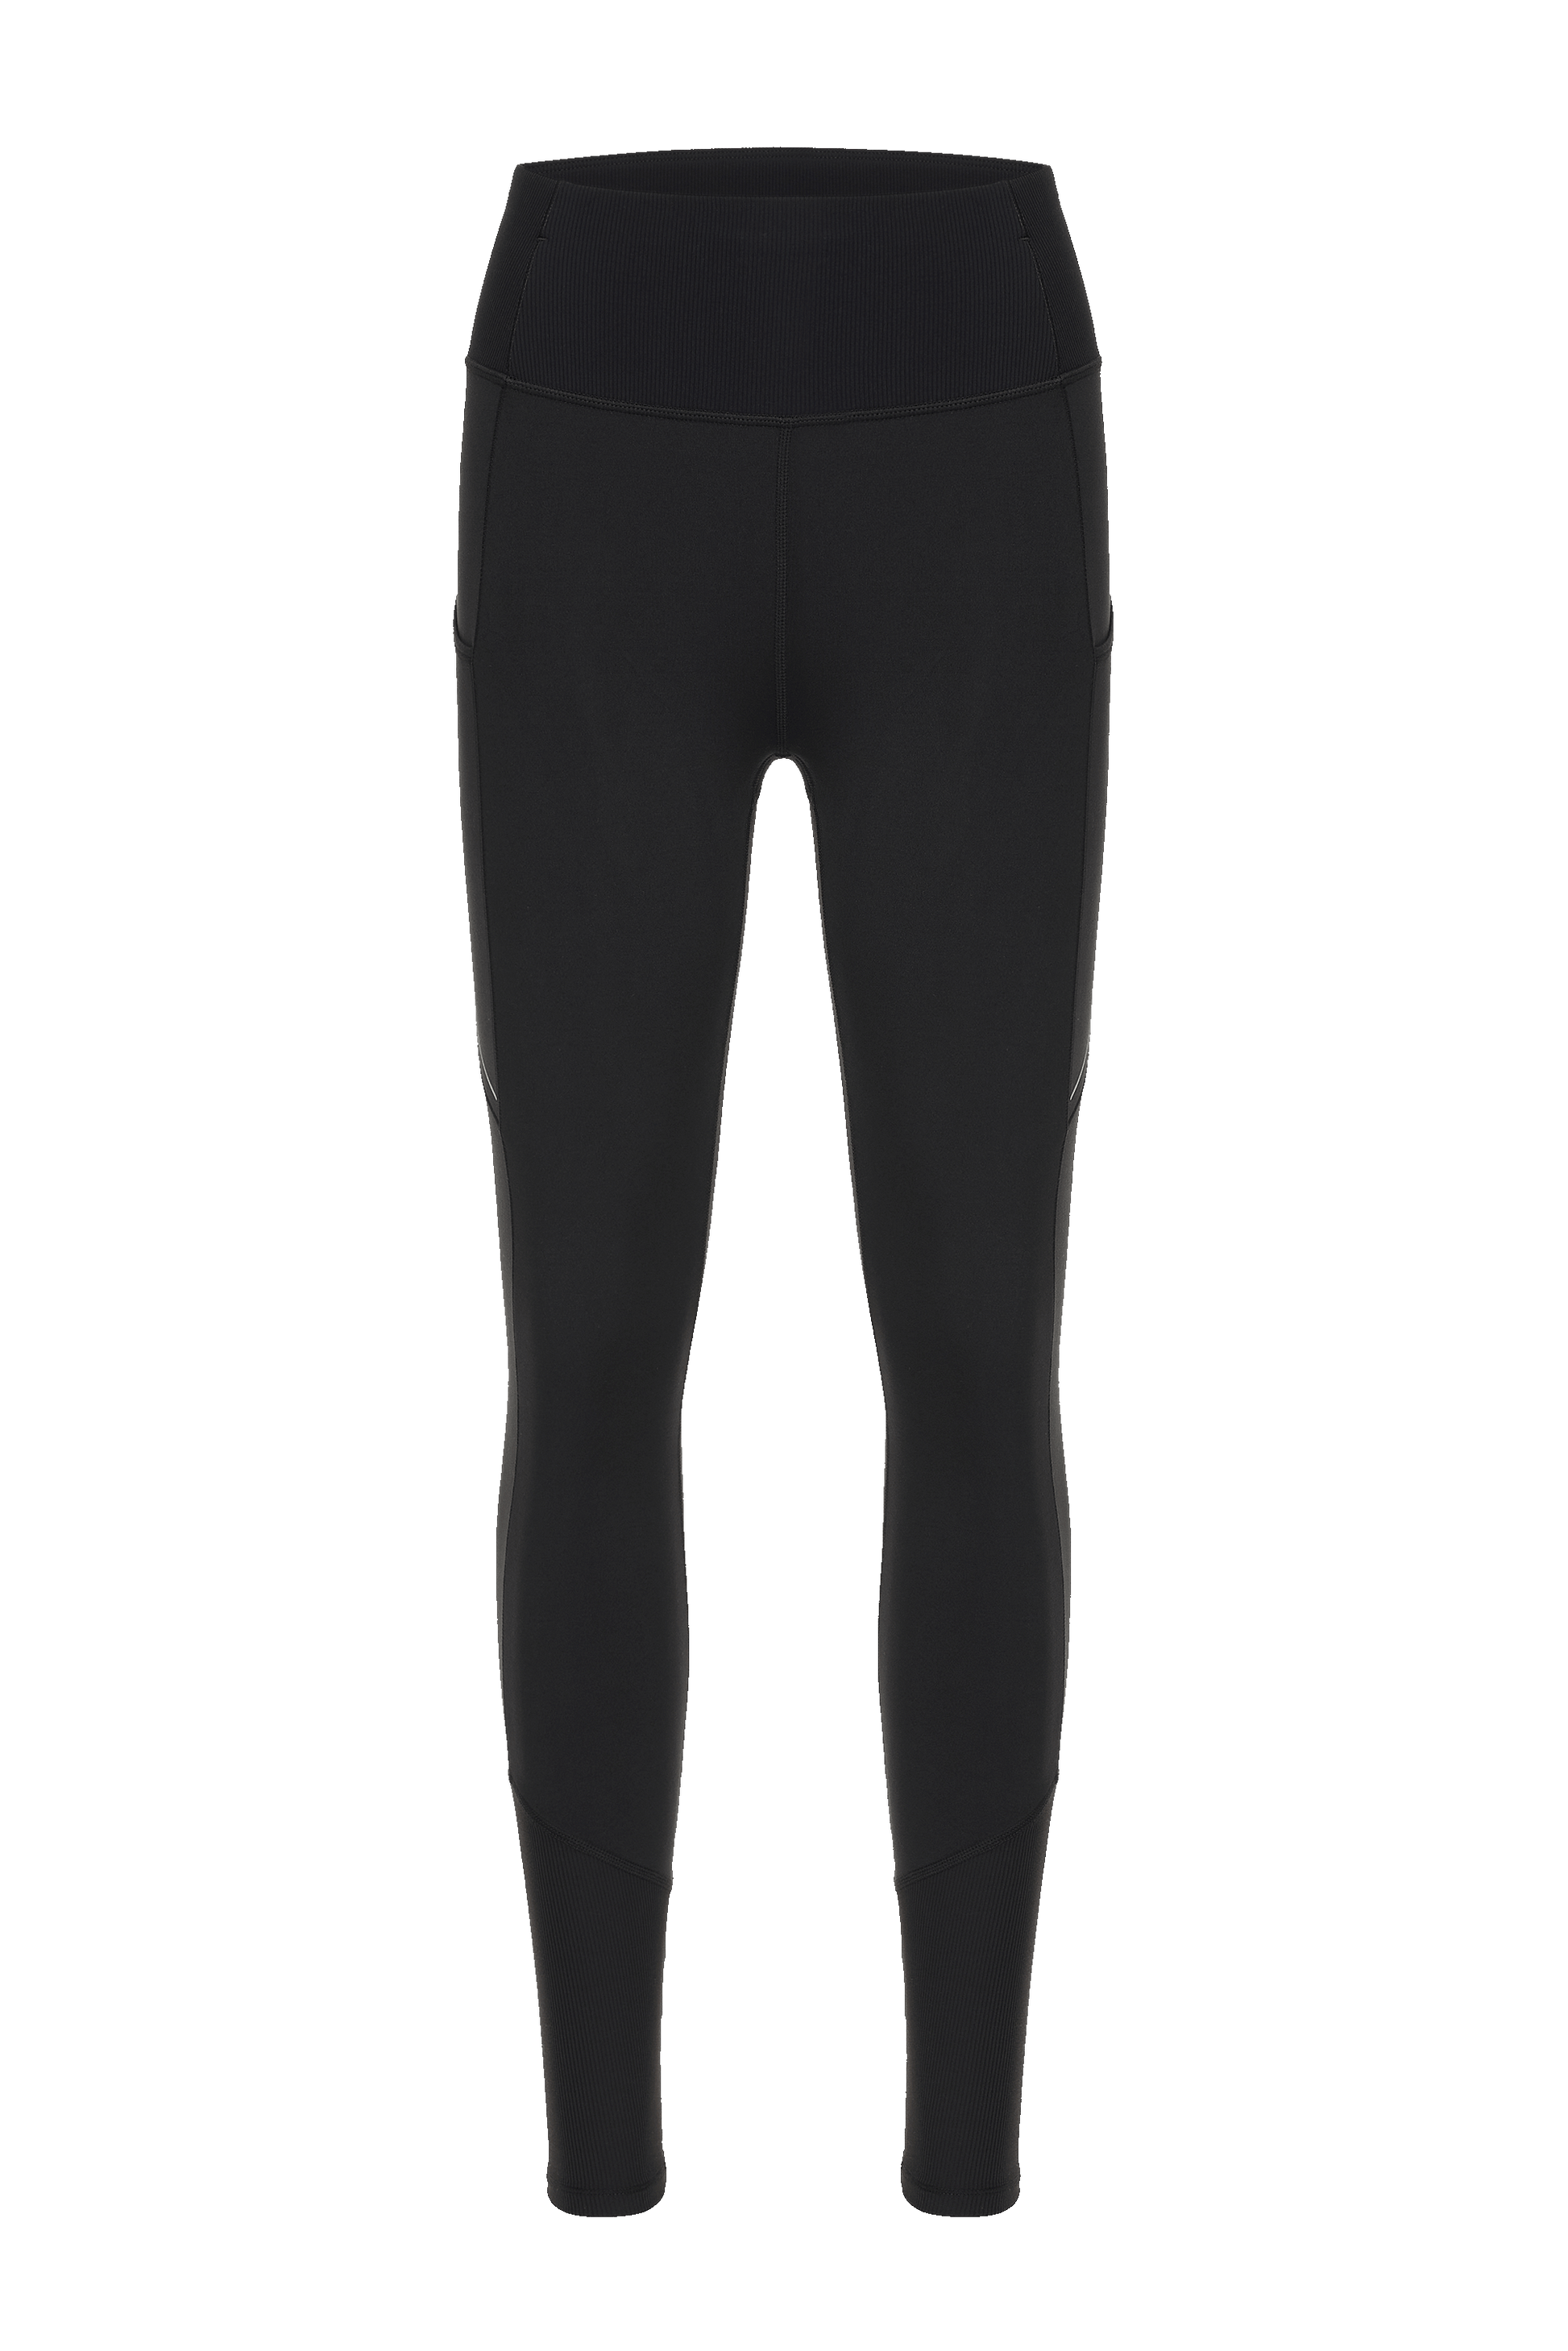 image of black leggings